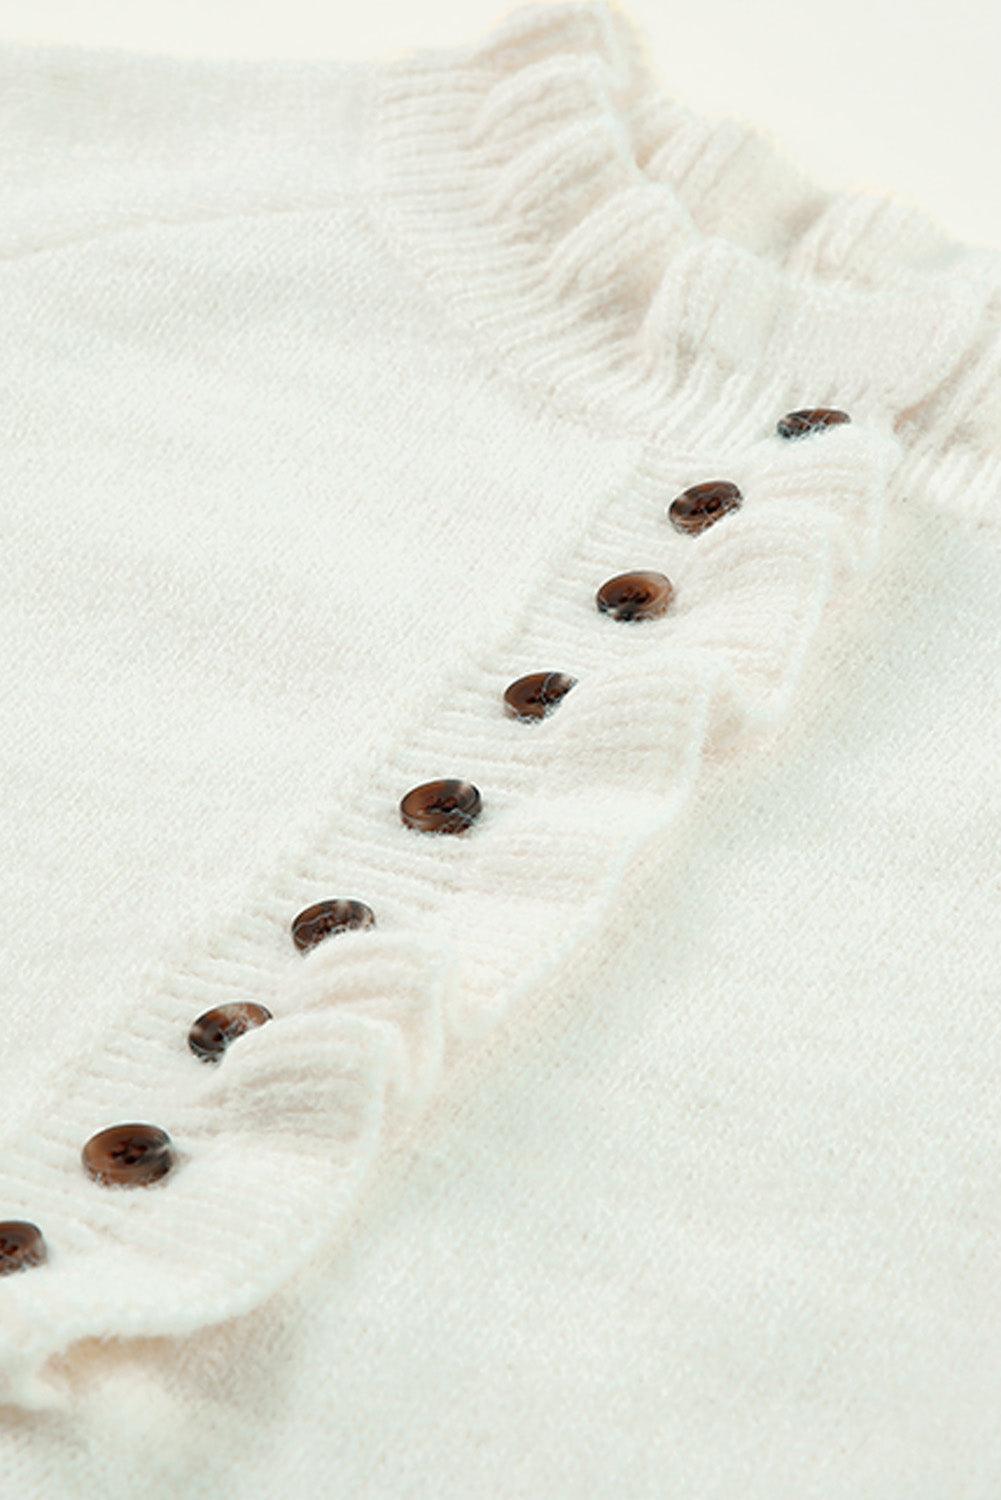 Beige Frill Trim Button Casual Knit Pullover Sweater - Ninonine